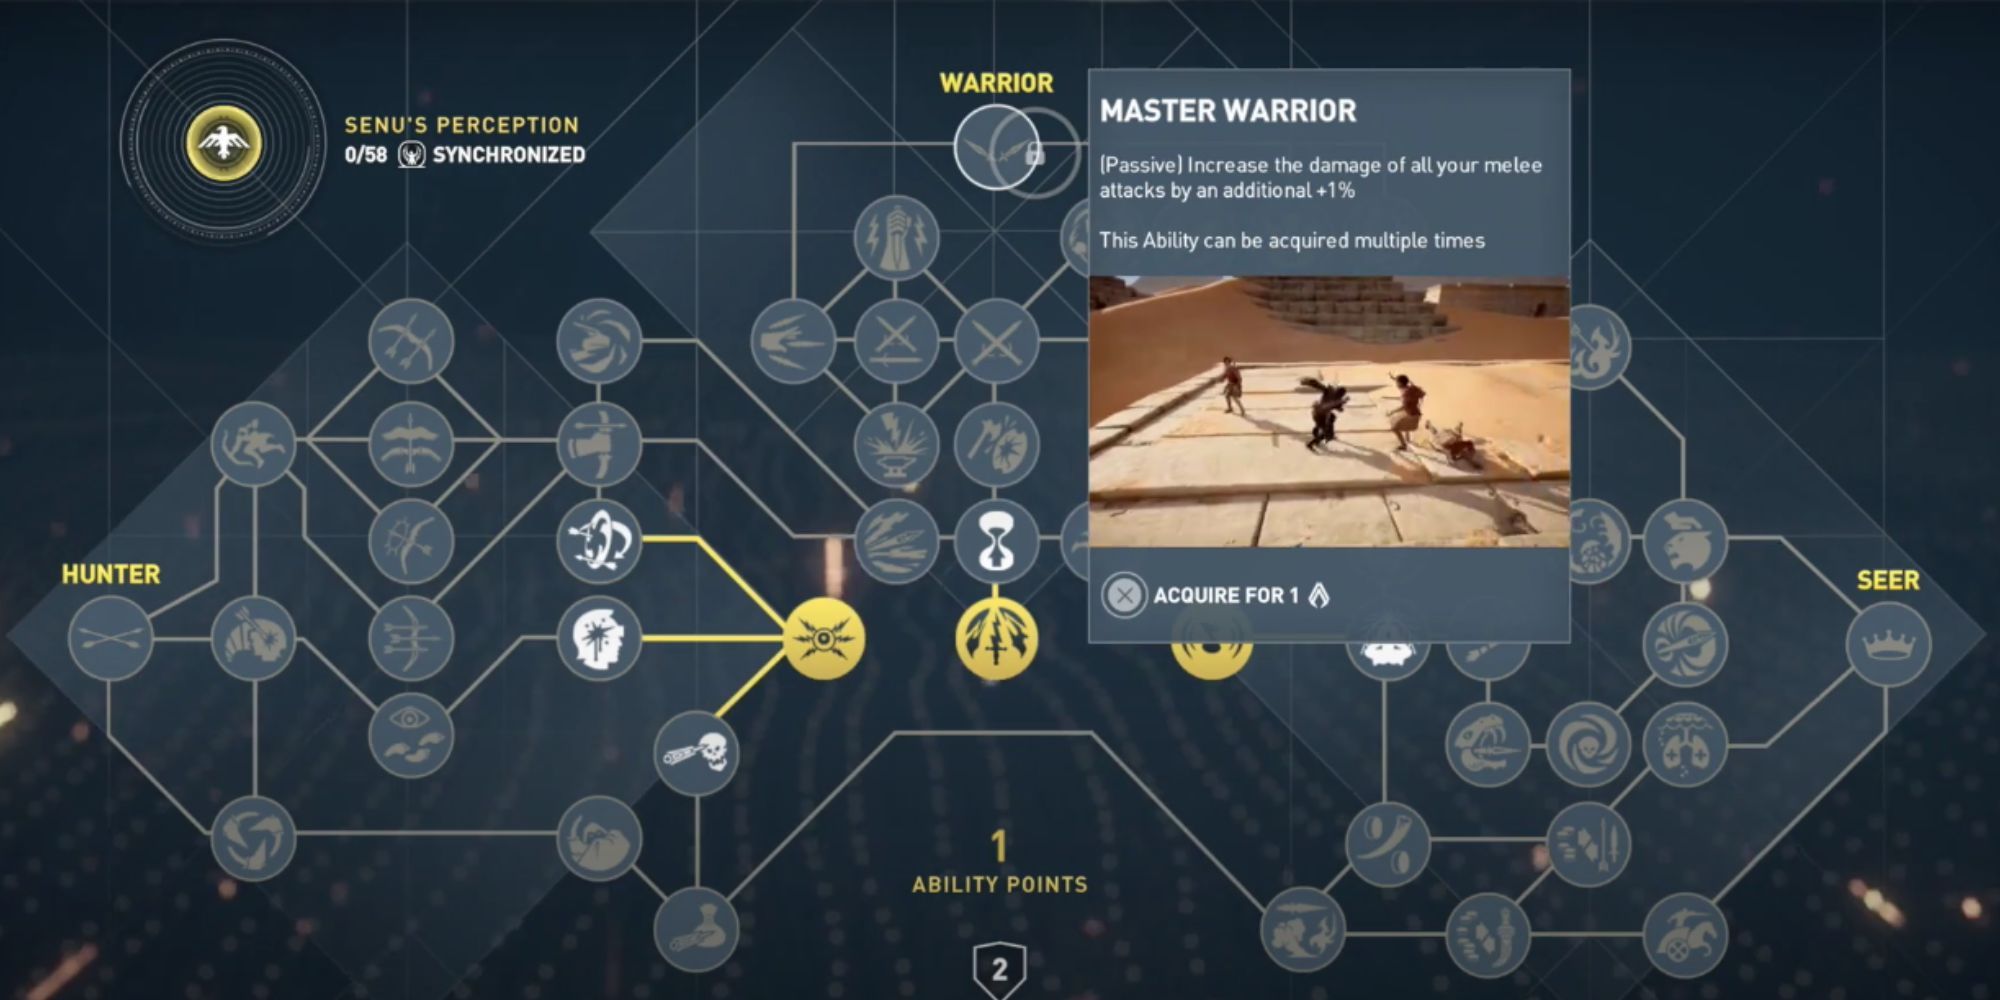 The Warrior Skill Master Warrior in Assassins Creed Origins